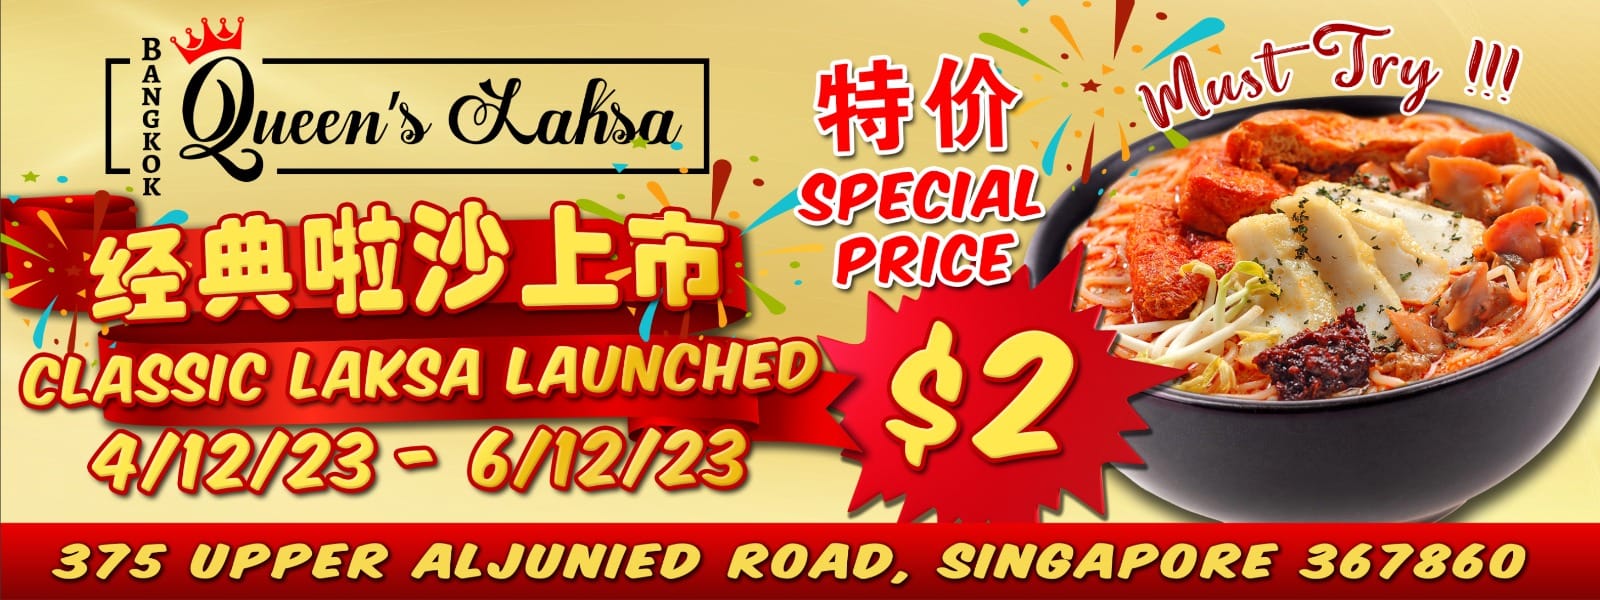 Bangkok Queen's Mookata & Fried Rice $2 Laksa promo - Laksa banner